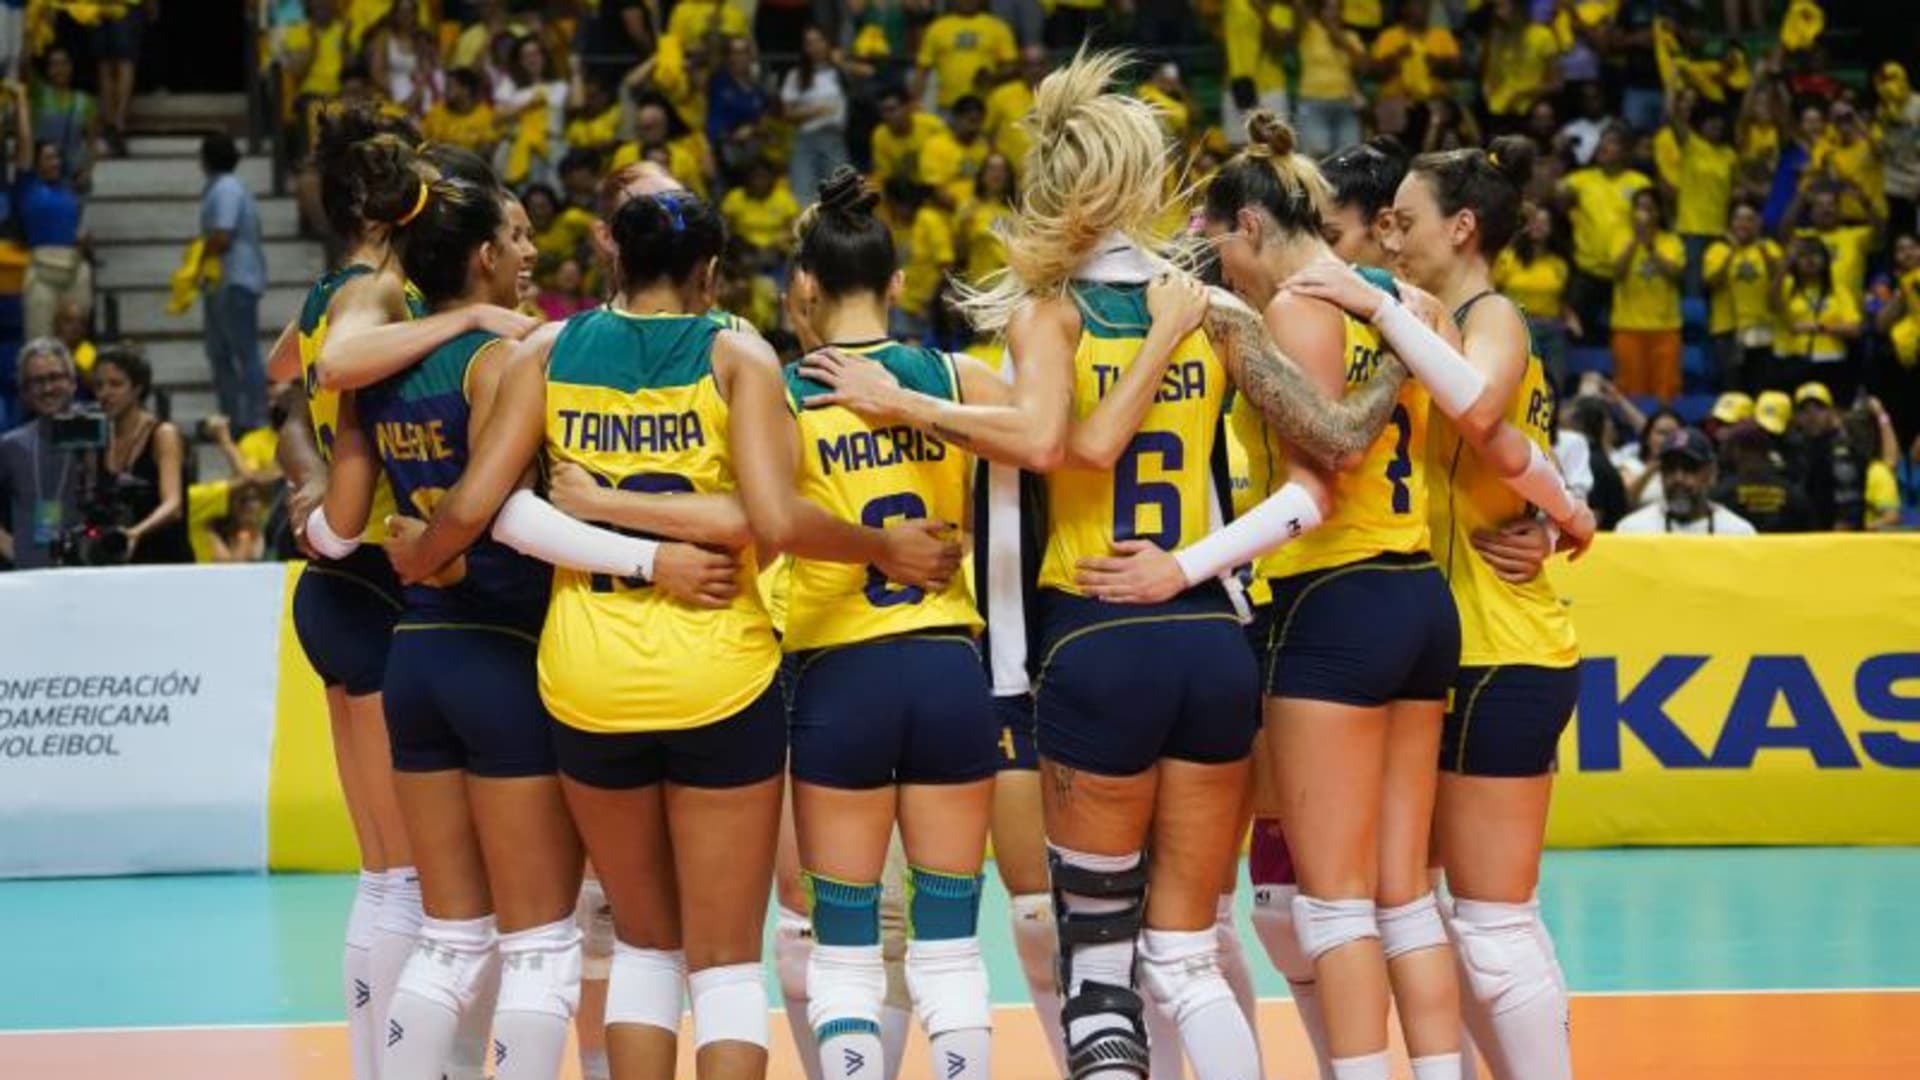 Campeonato Sul-Americano de vôlei feminino: quantos títulos o